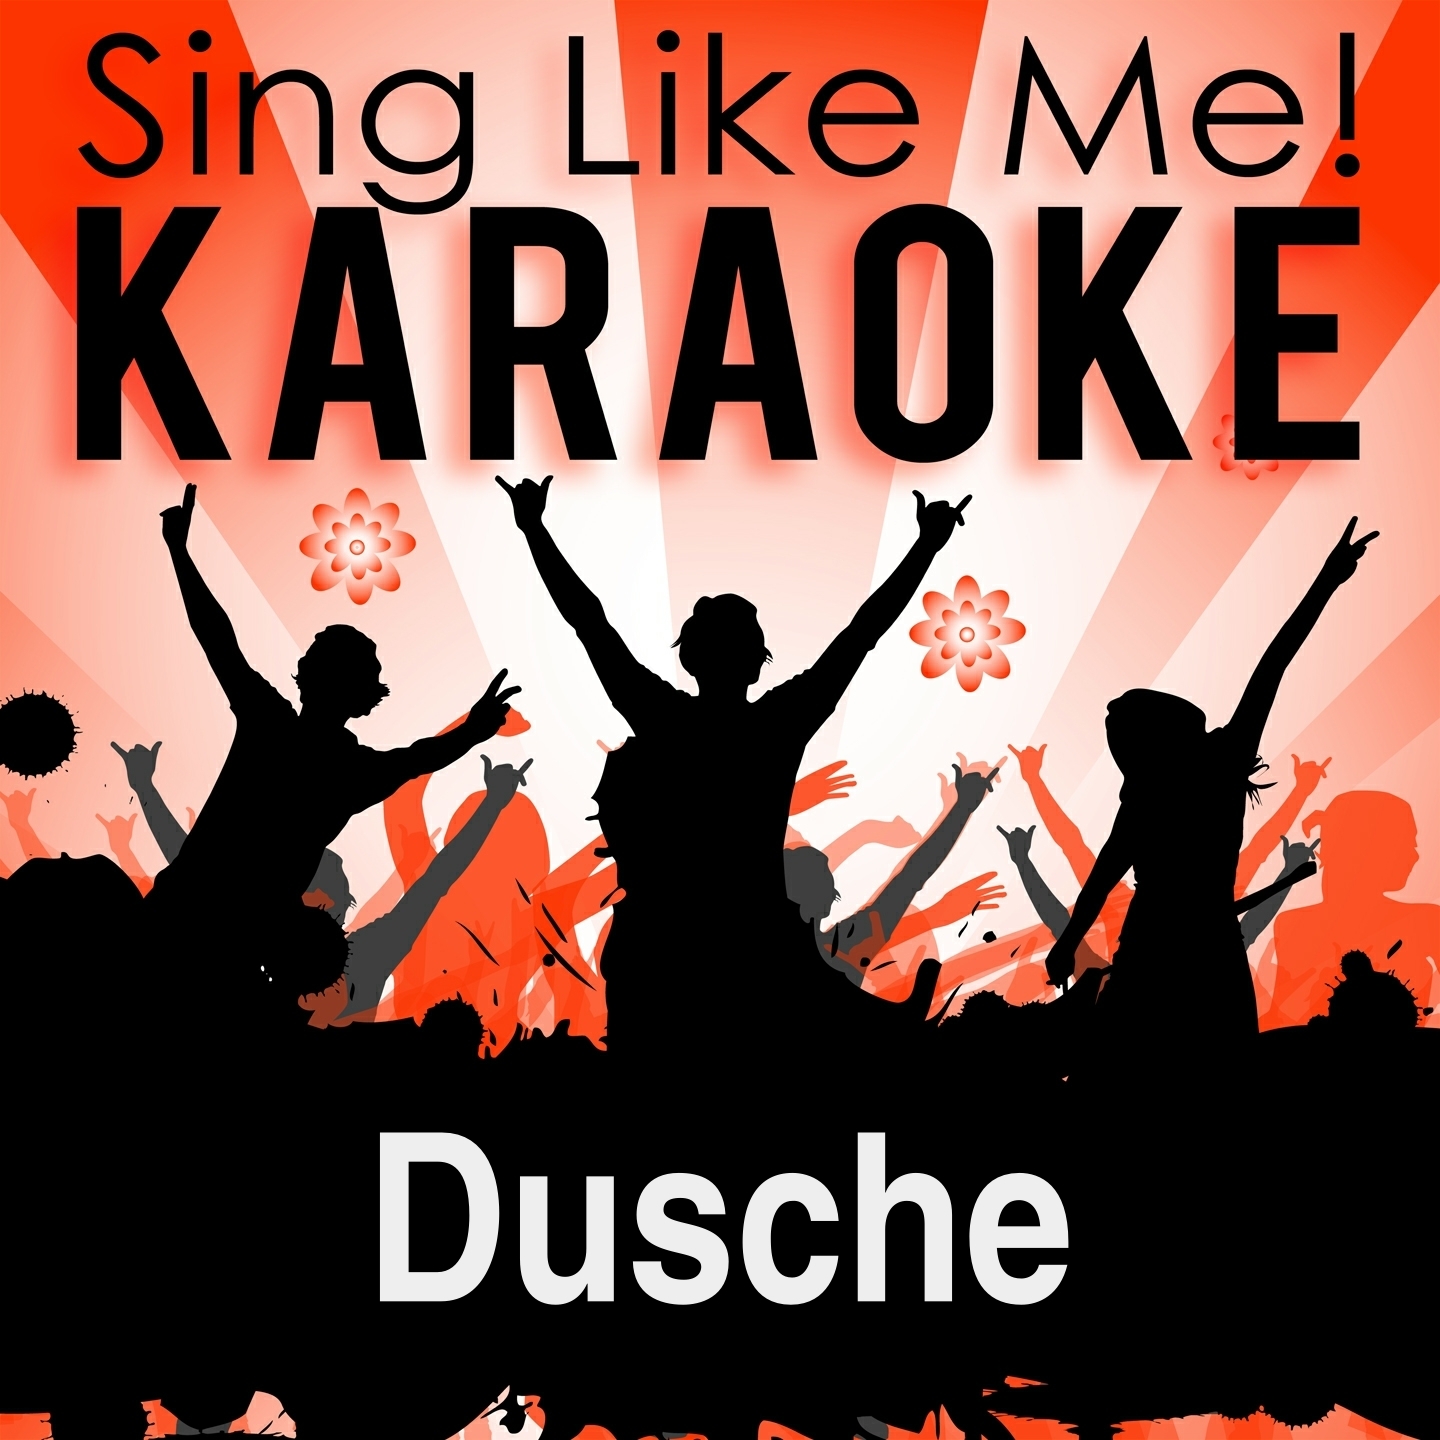 Dusche (Karaoke Version) (Originally Performed By Farin Urlaub)